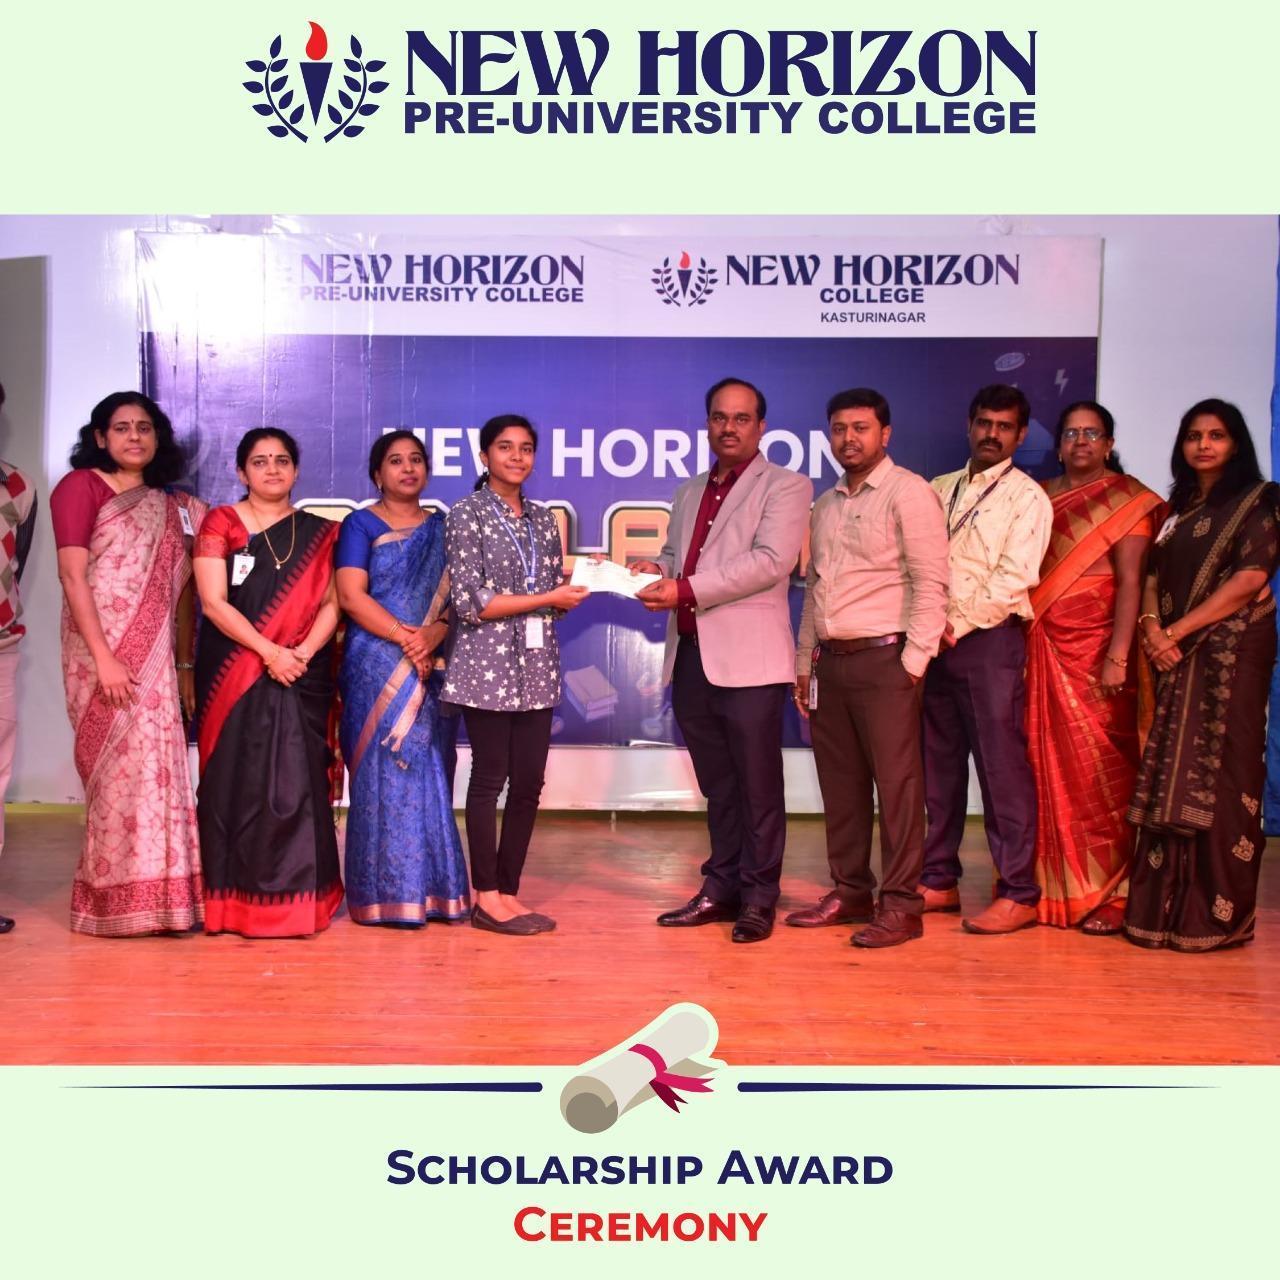 Scholarship Award Ceremony at New Horizon Pre-University College